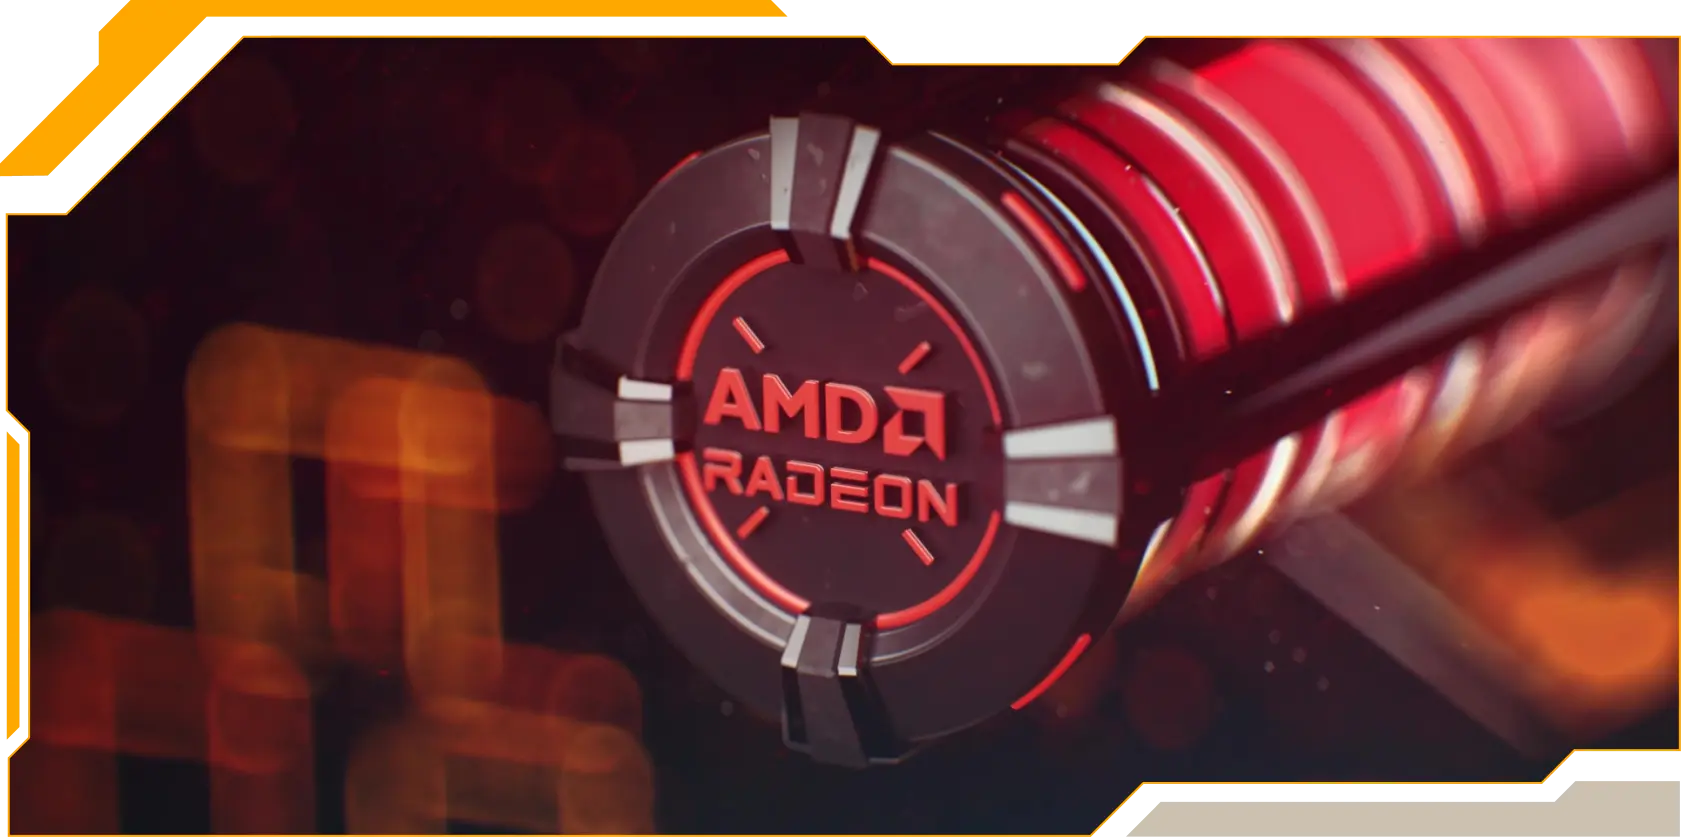 GPU 的簡化 3D 渲染圖，頂部印有橘色字樣「AMD Radeon」。